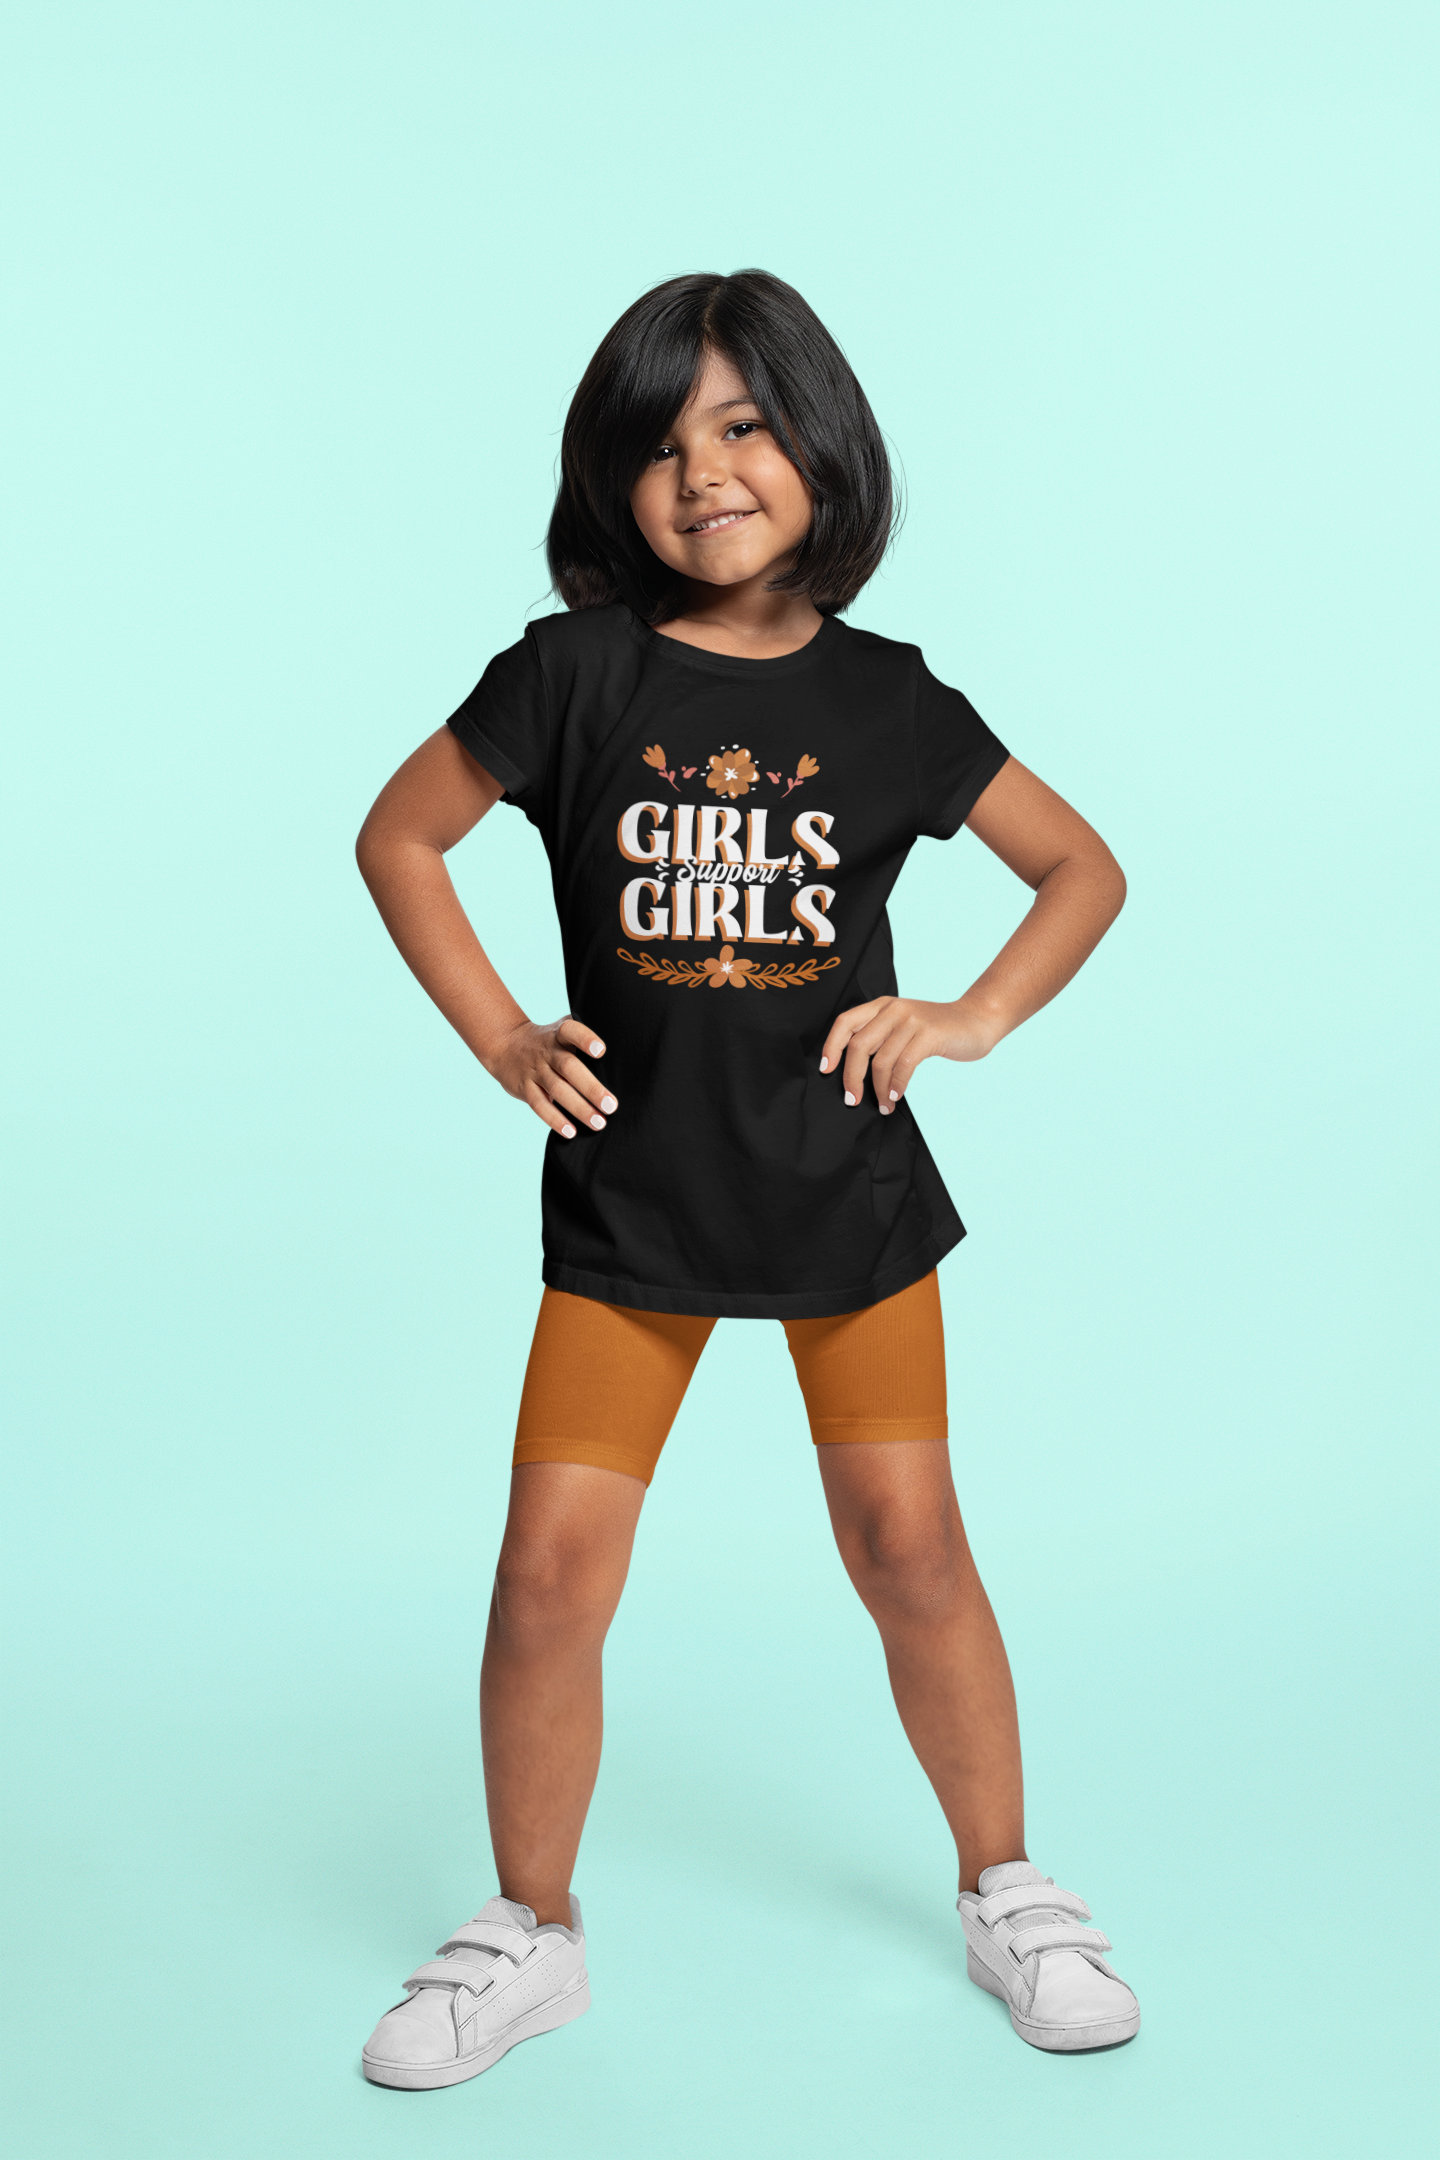 Girls Support Girls Printed Black Kids T-shirts